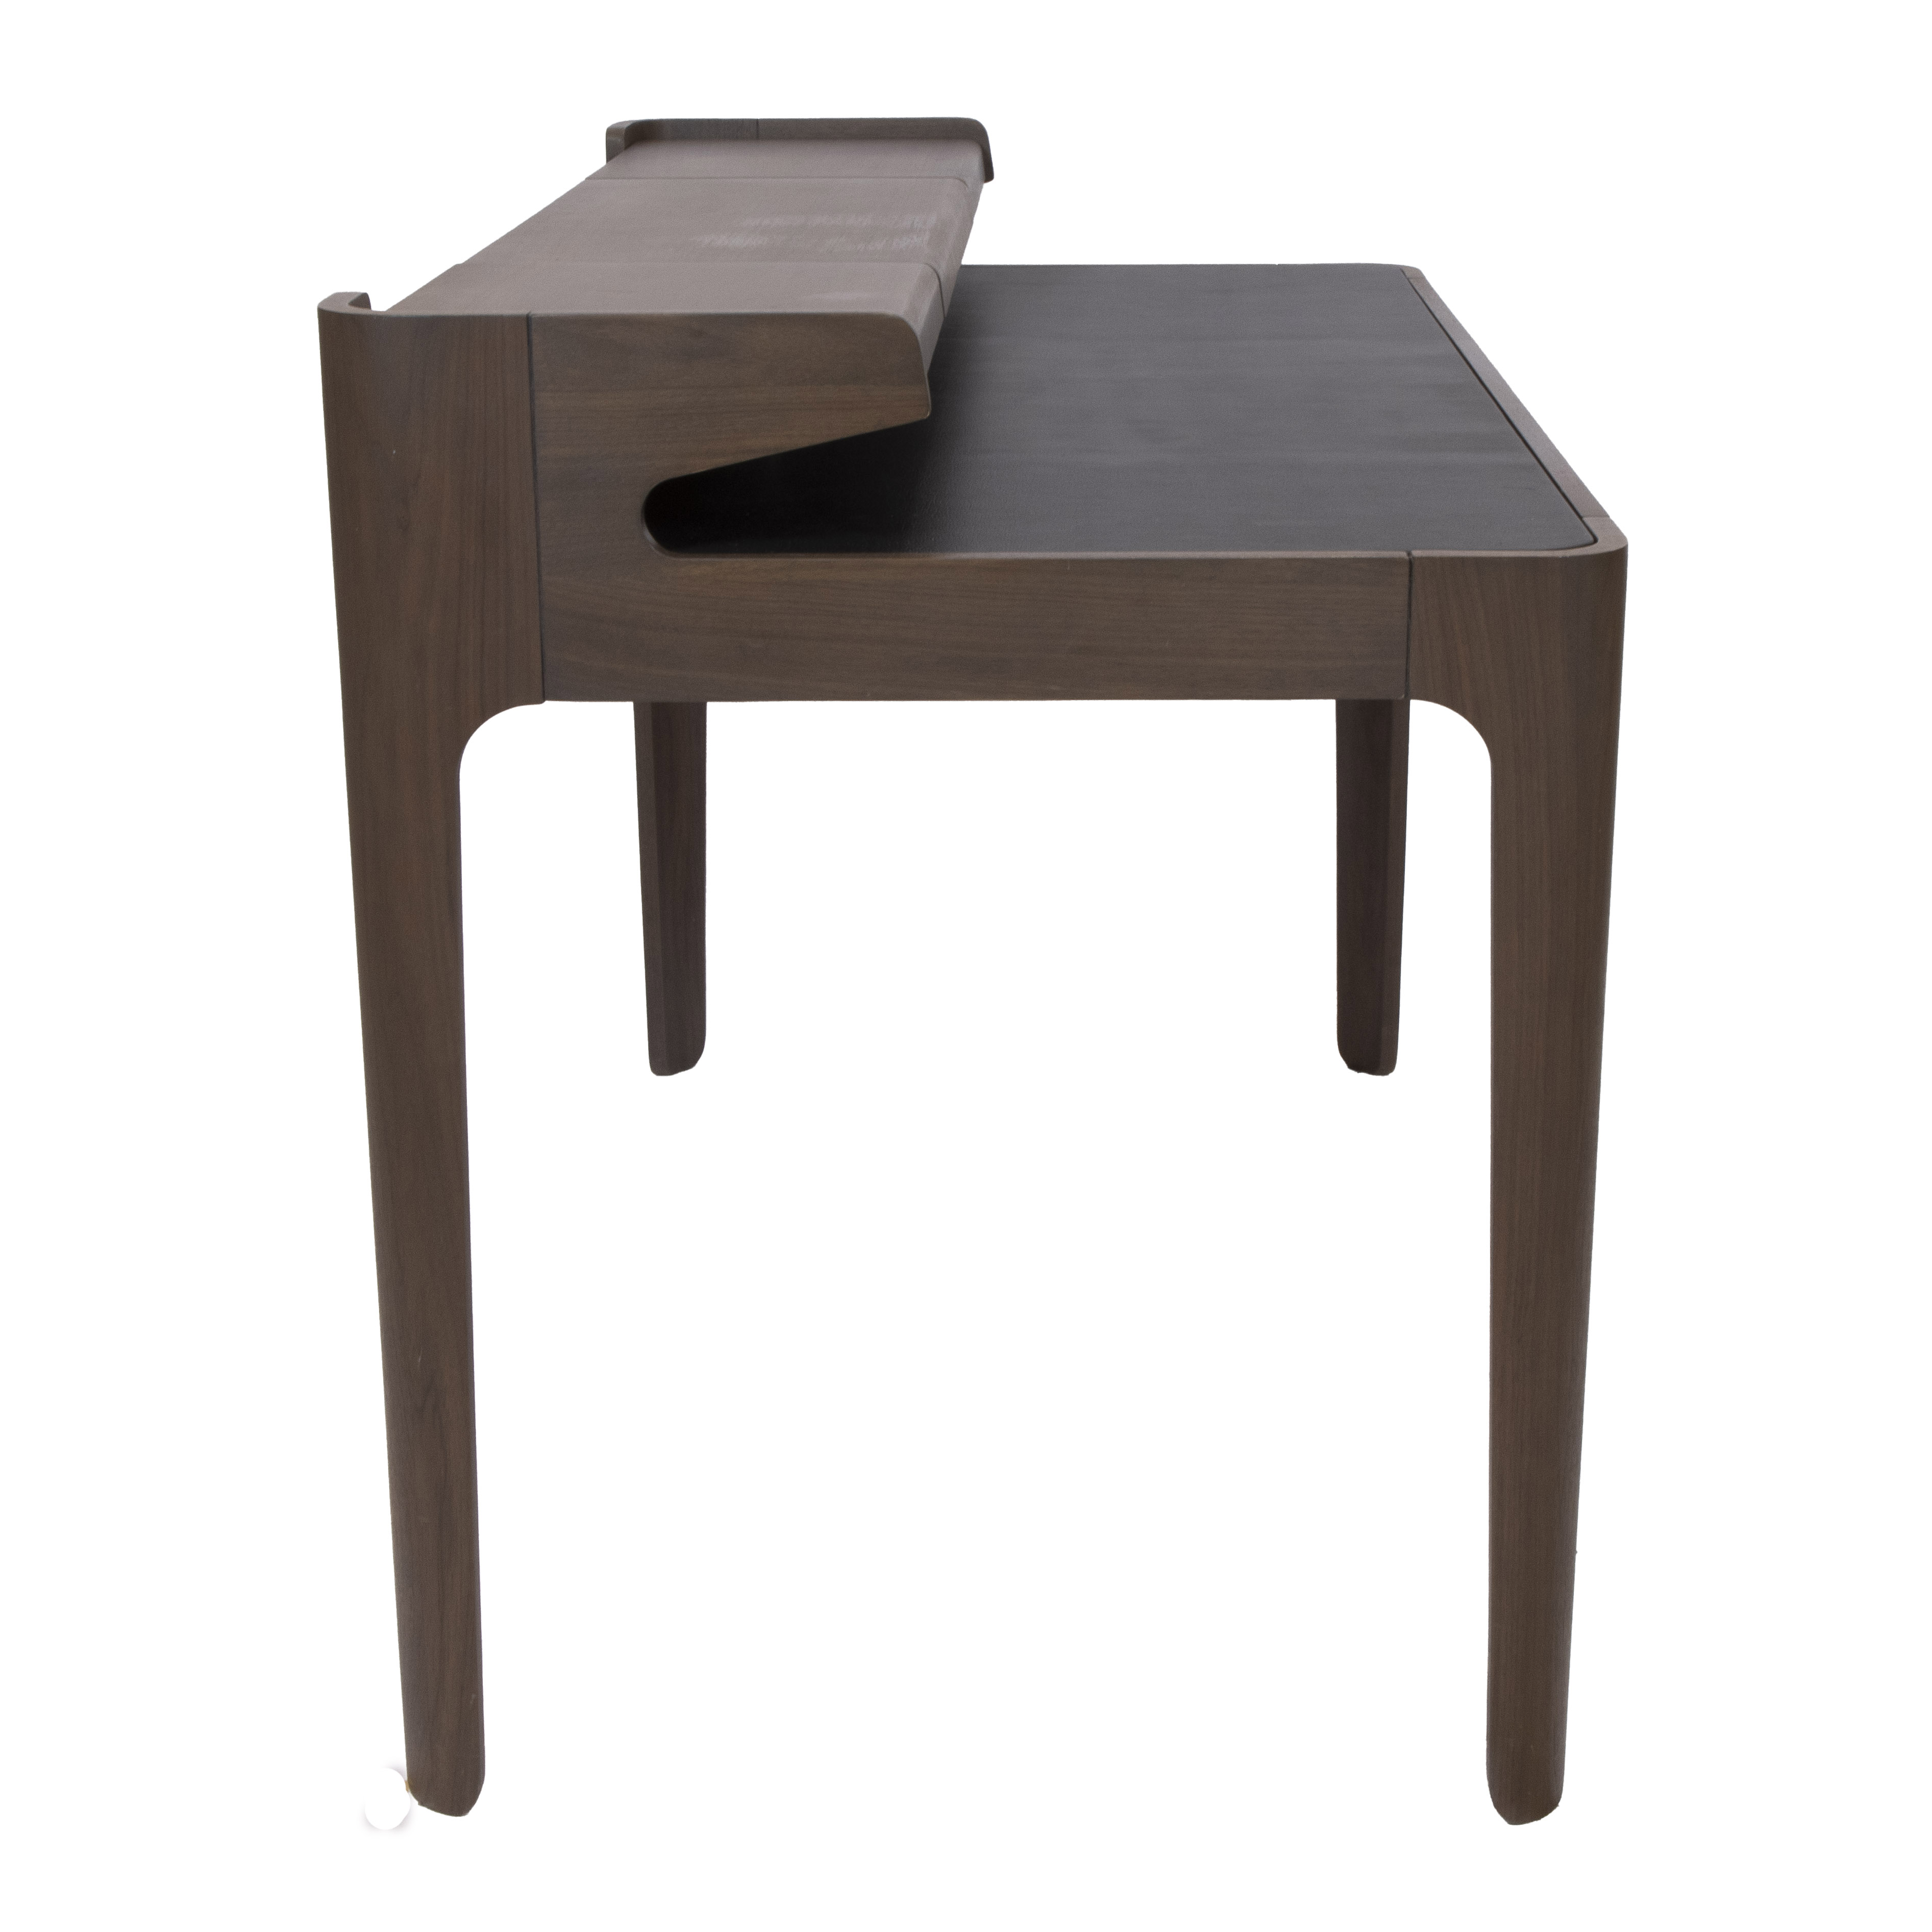 Exclusive desktop Zeke desk, designed by designer Simon Pengelly, wallnut and black leather top - Image 5 of 5